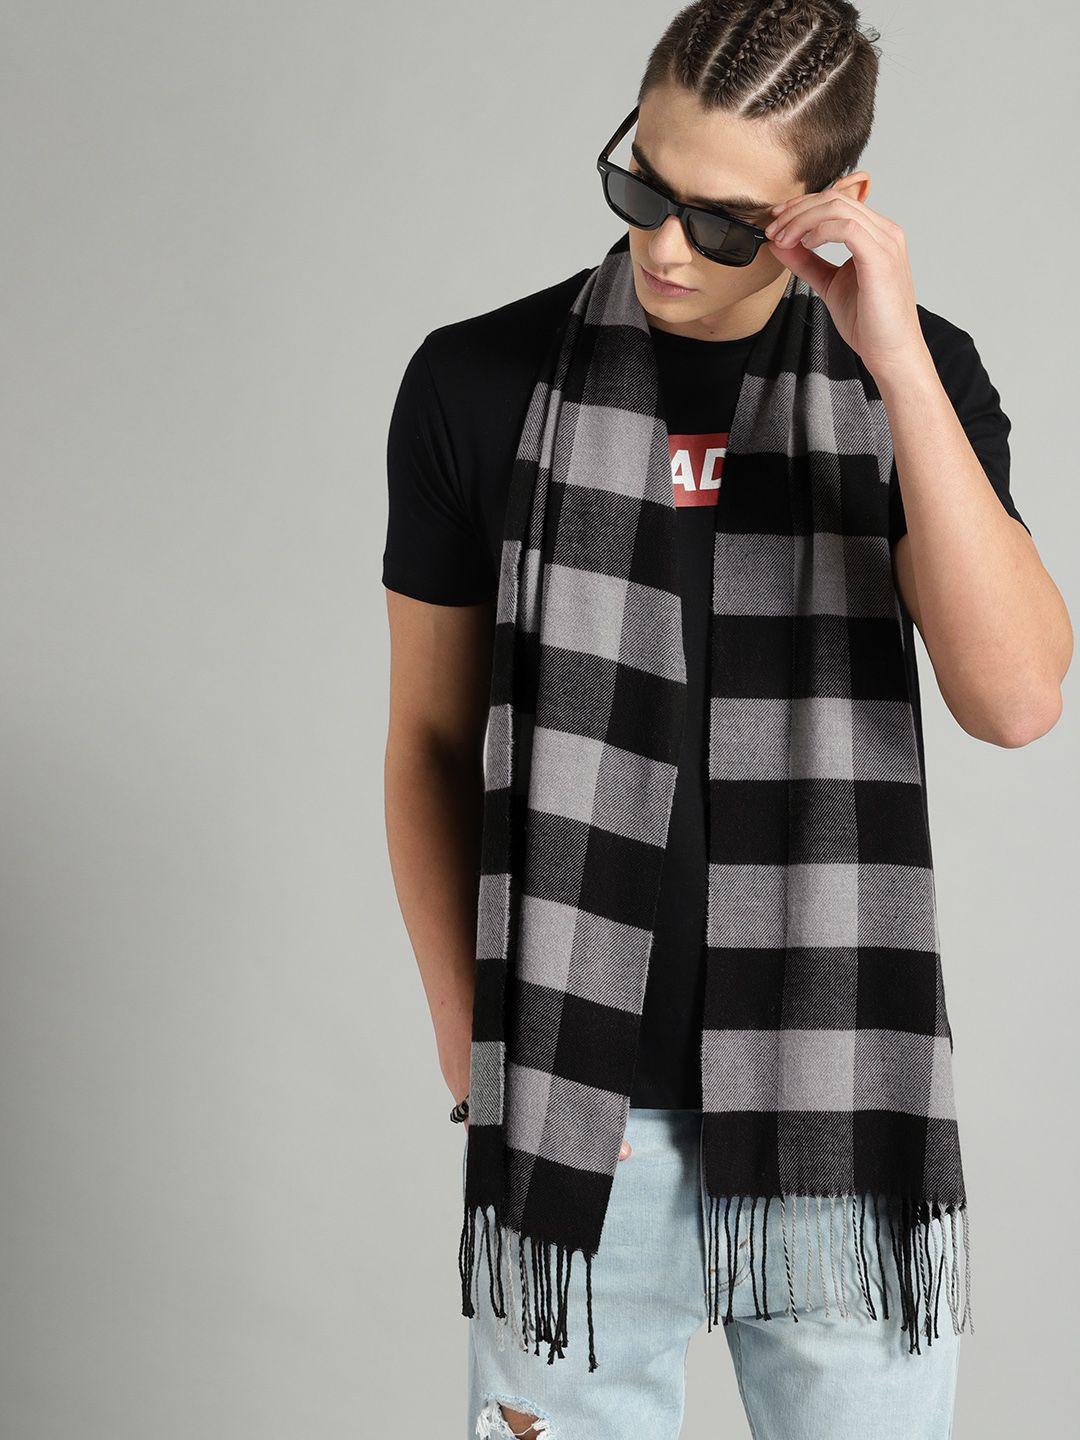 the roadster lifestyle co unisex black & grey melange checked acrylic scarf